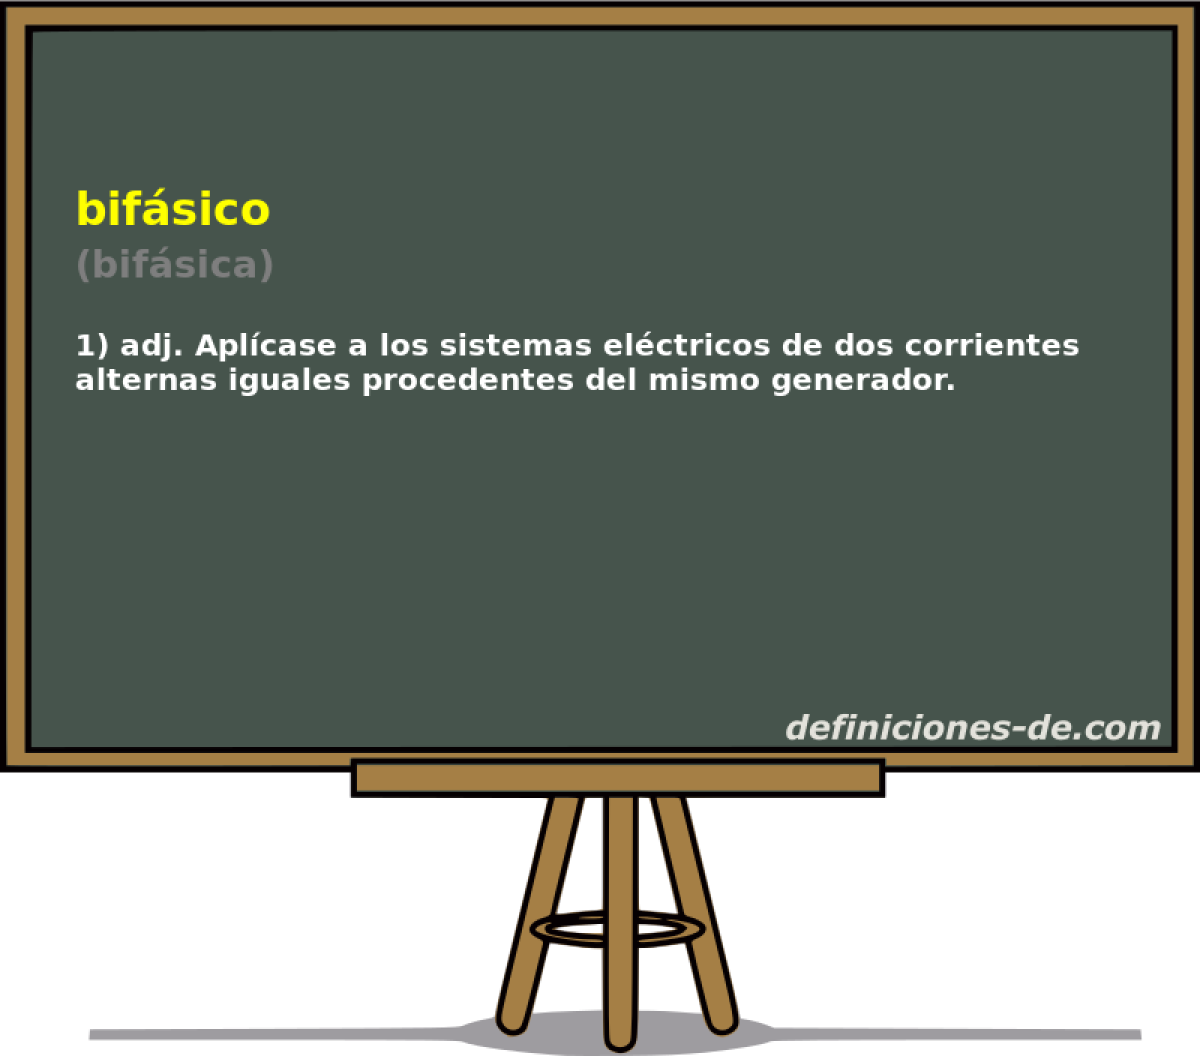 bifsico (bifsica)